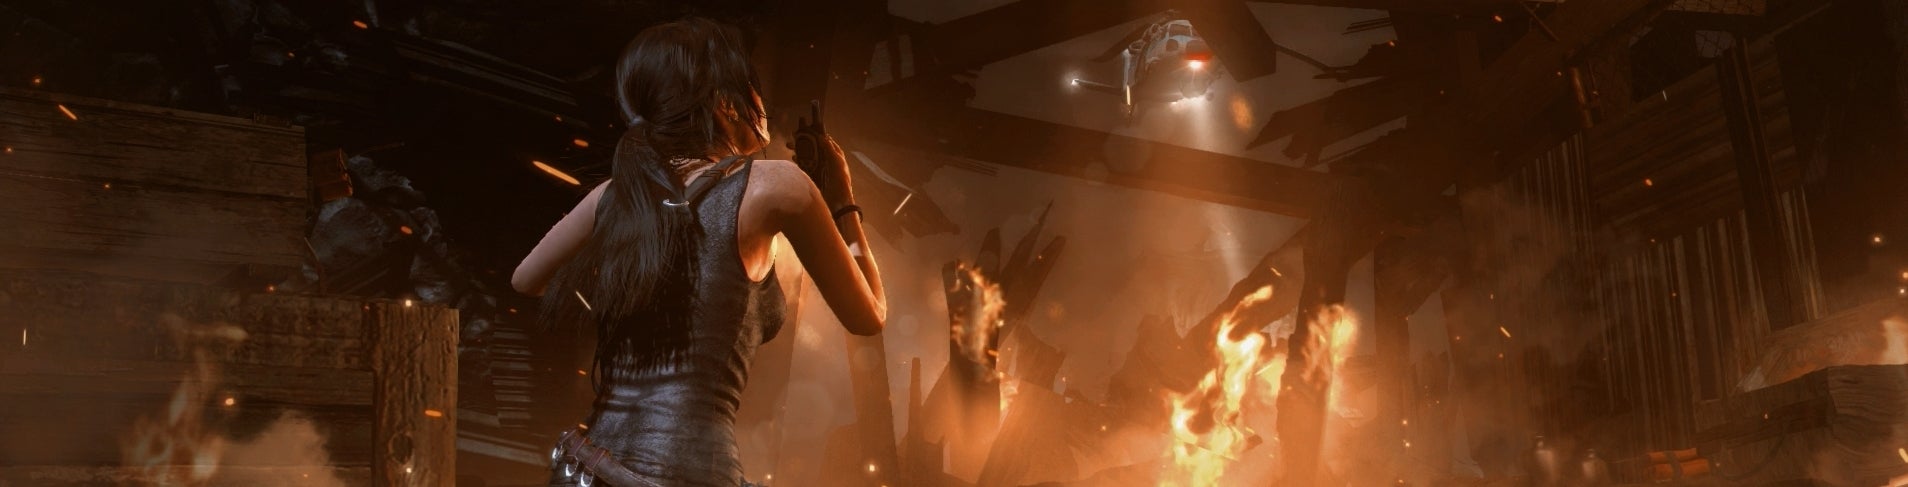 Image for Jak Tomb Raider využije DualShock 4? A co sleva pro majitele originálu?